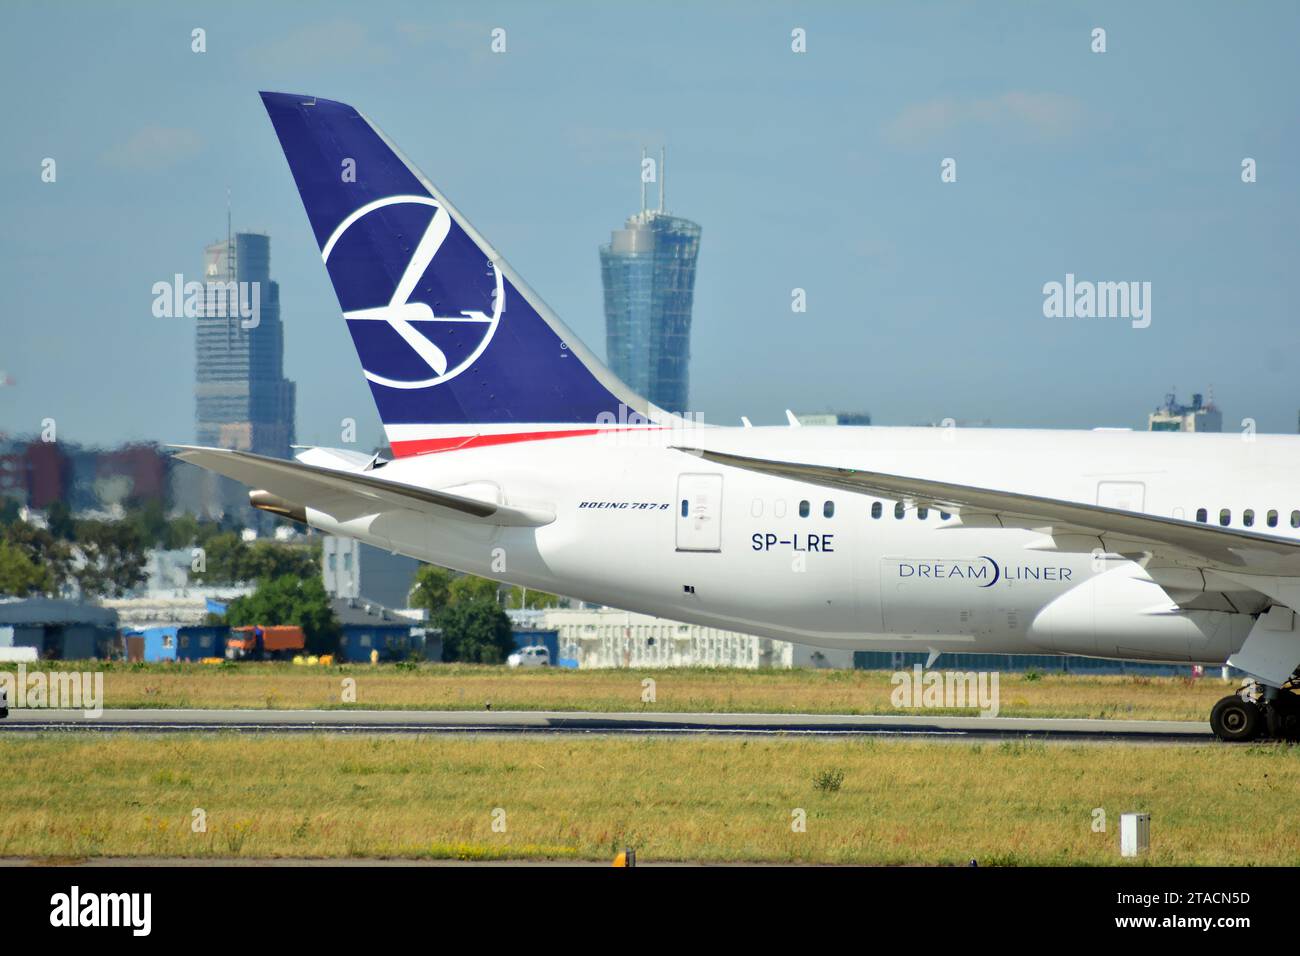 Warsaw Poland. May 28, 2018. Passenger plane just before landing at Chopin Airport. Stock Photo